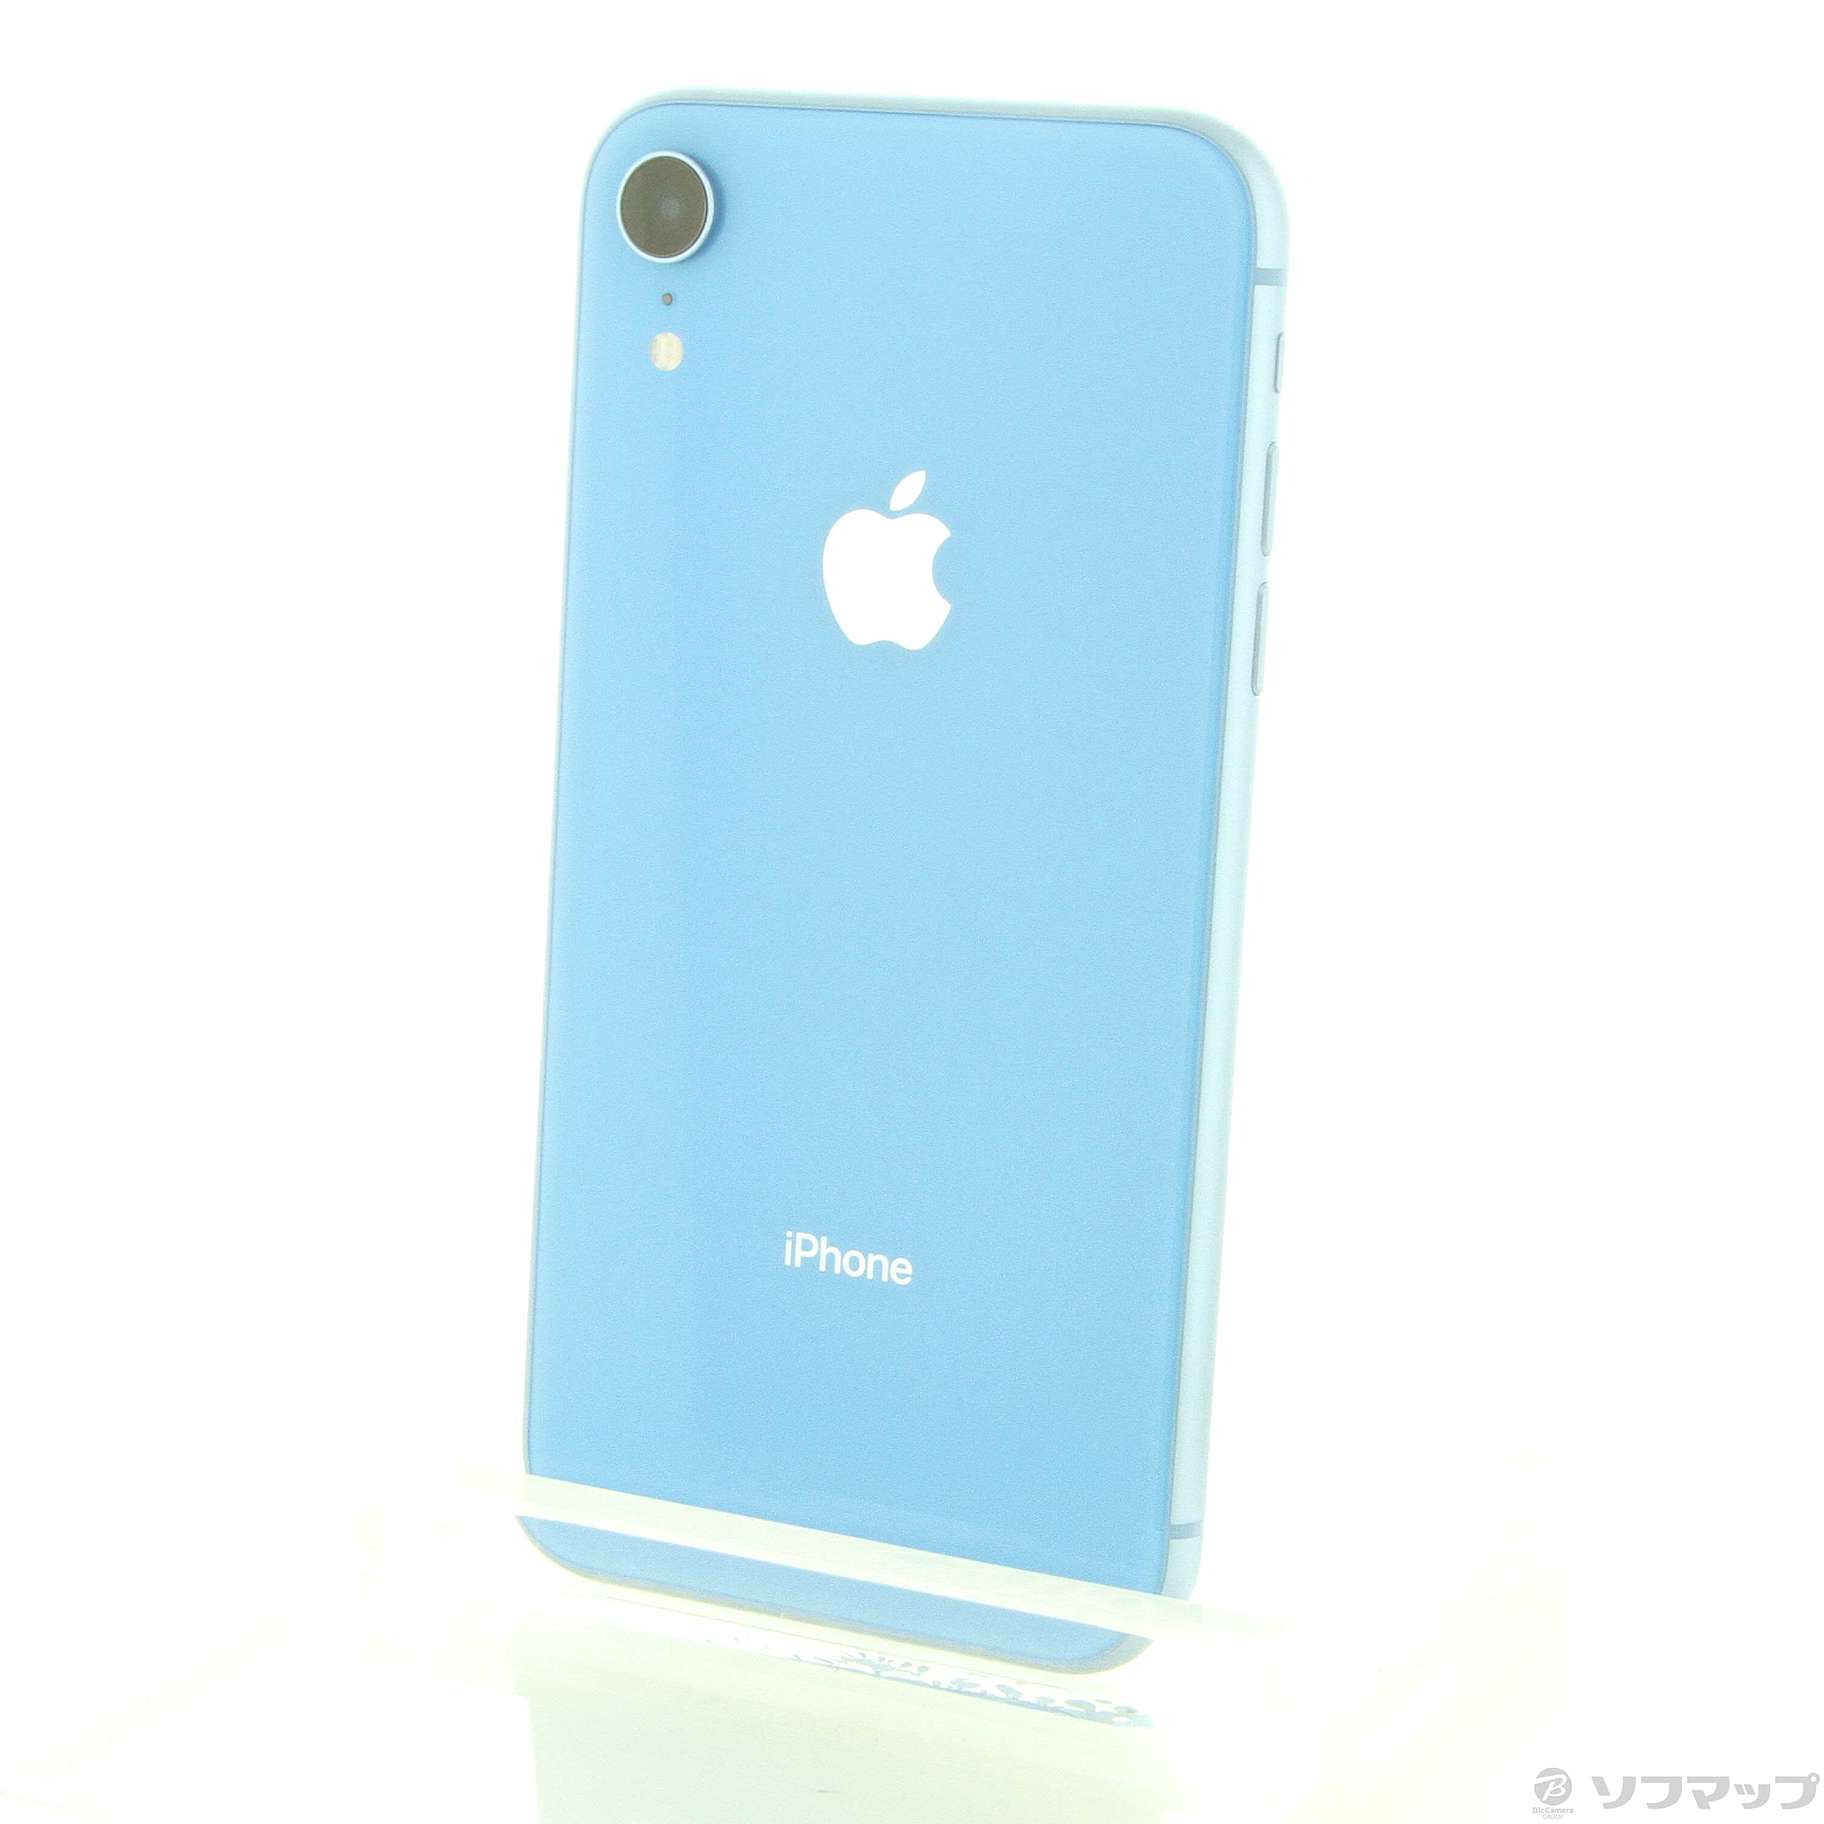 iPhoneXR 64GB ブルー - スマートフォン本体